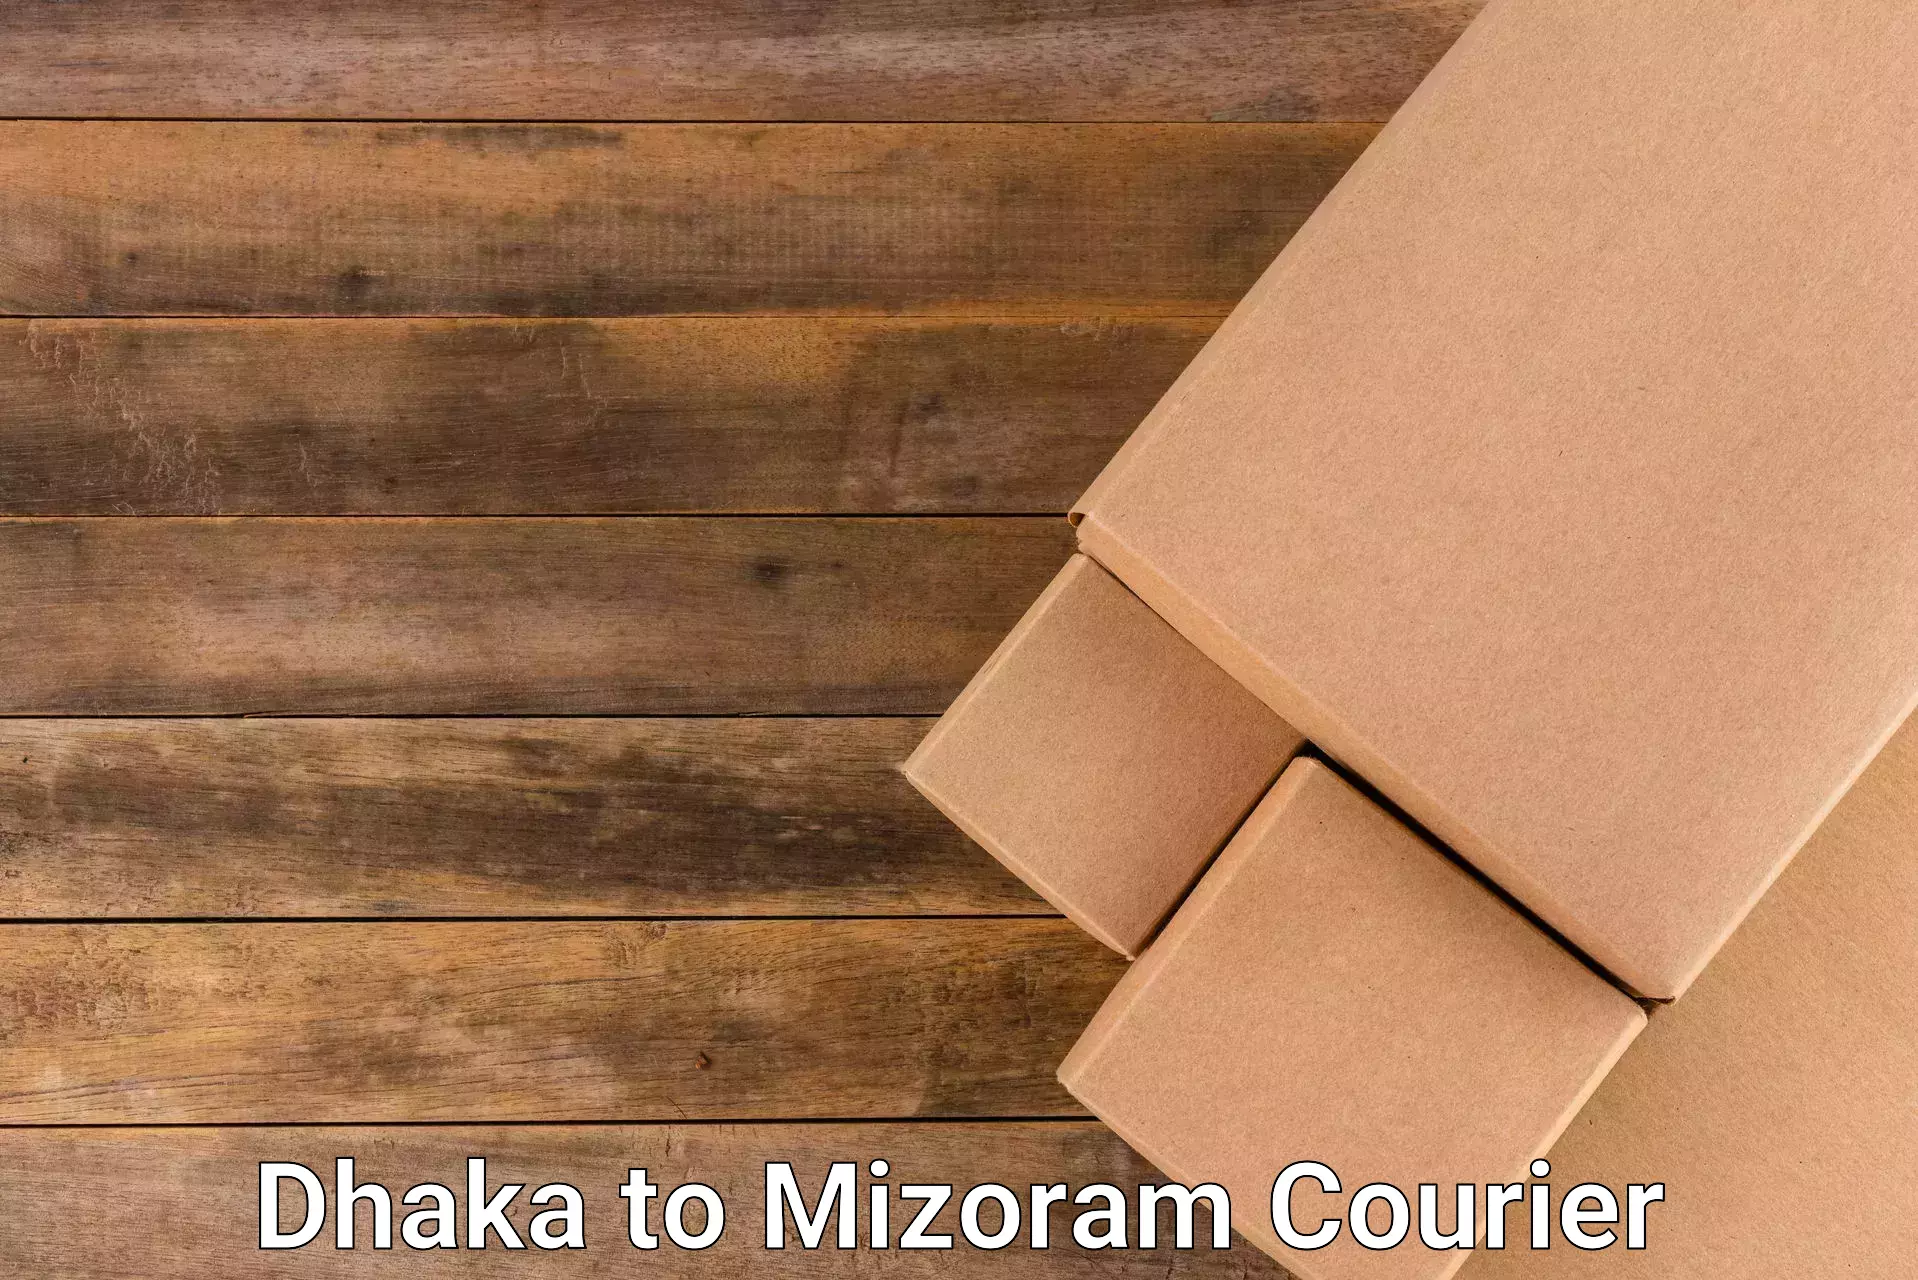 Logistics service provider Dhaka to Mizoram